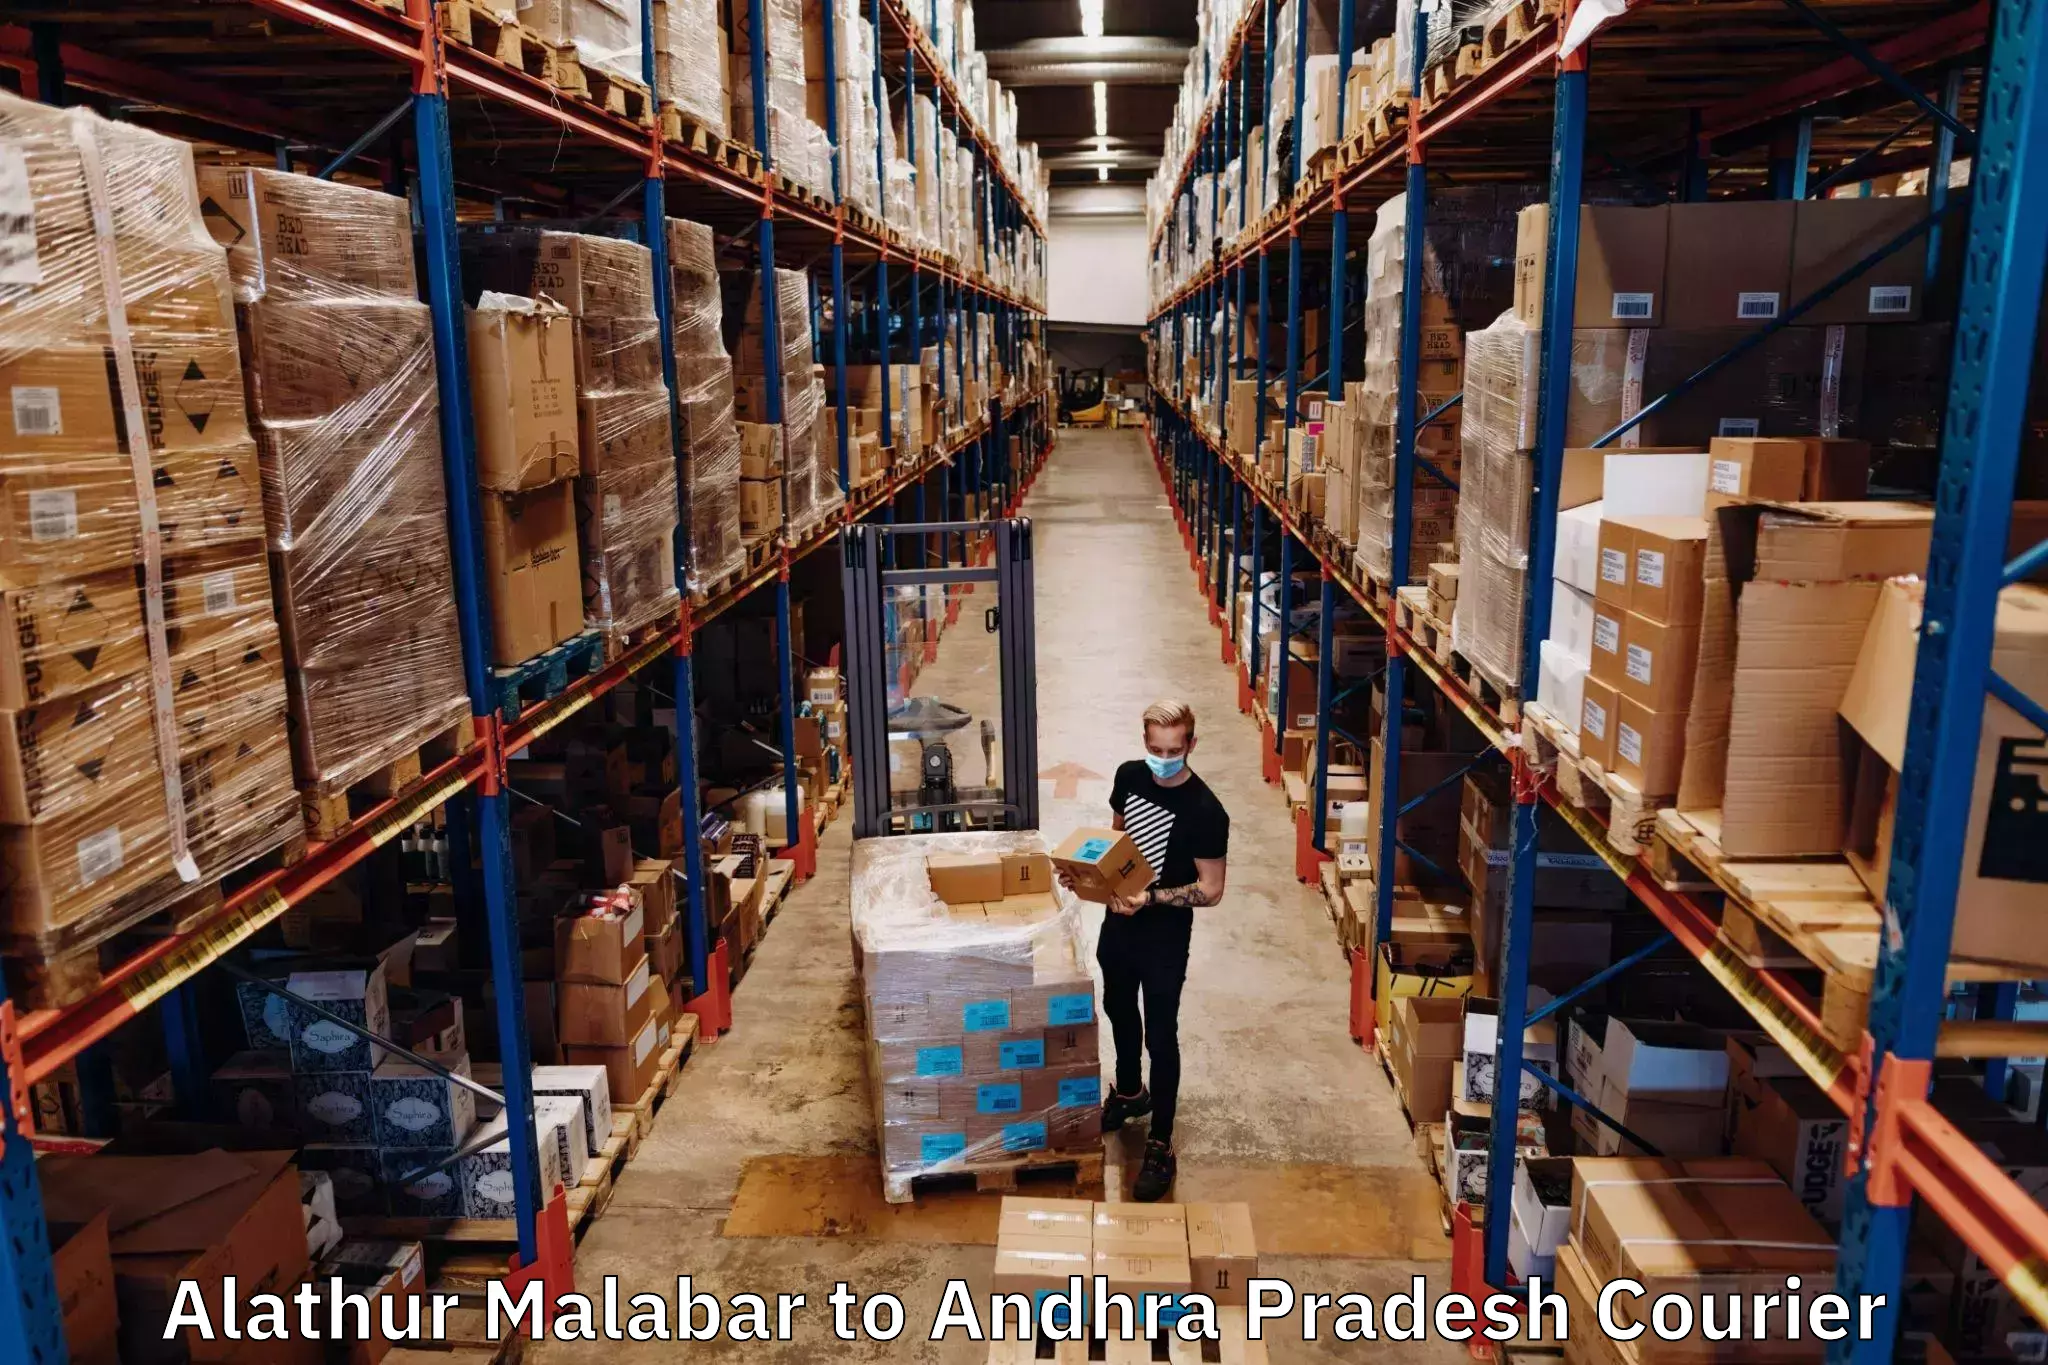 Professional parcel services Alathur Malabar to Yellamanchili